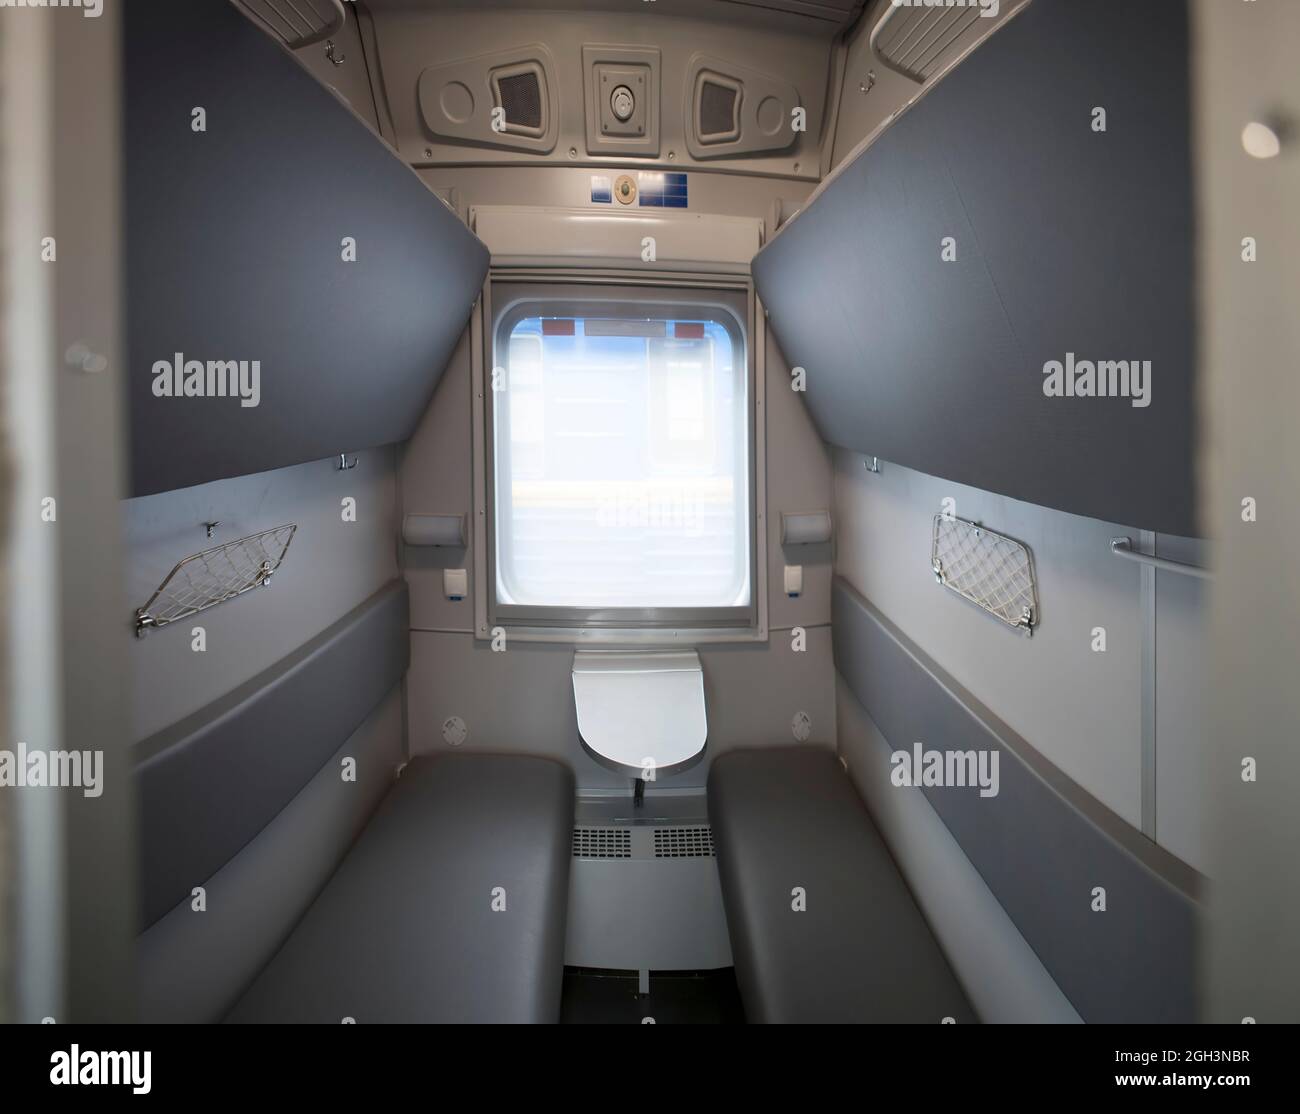 classic interior of sleeping car of train. interior of compartment car. Passenger train car. Sleeping car of passenger train Stock Photo